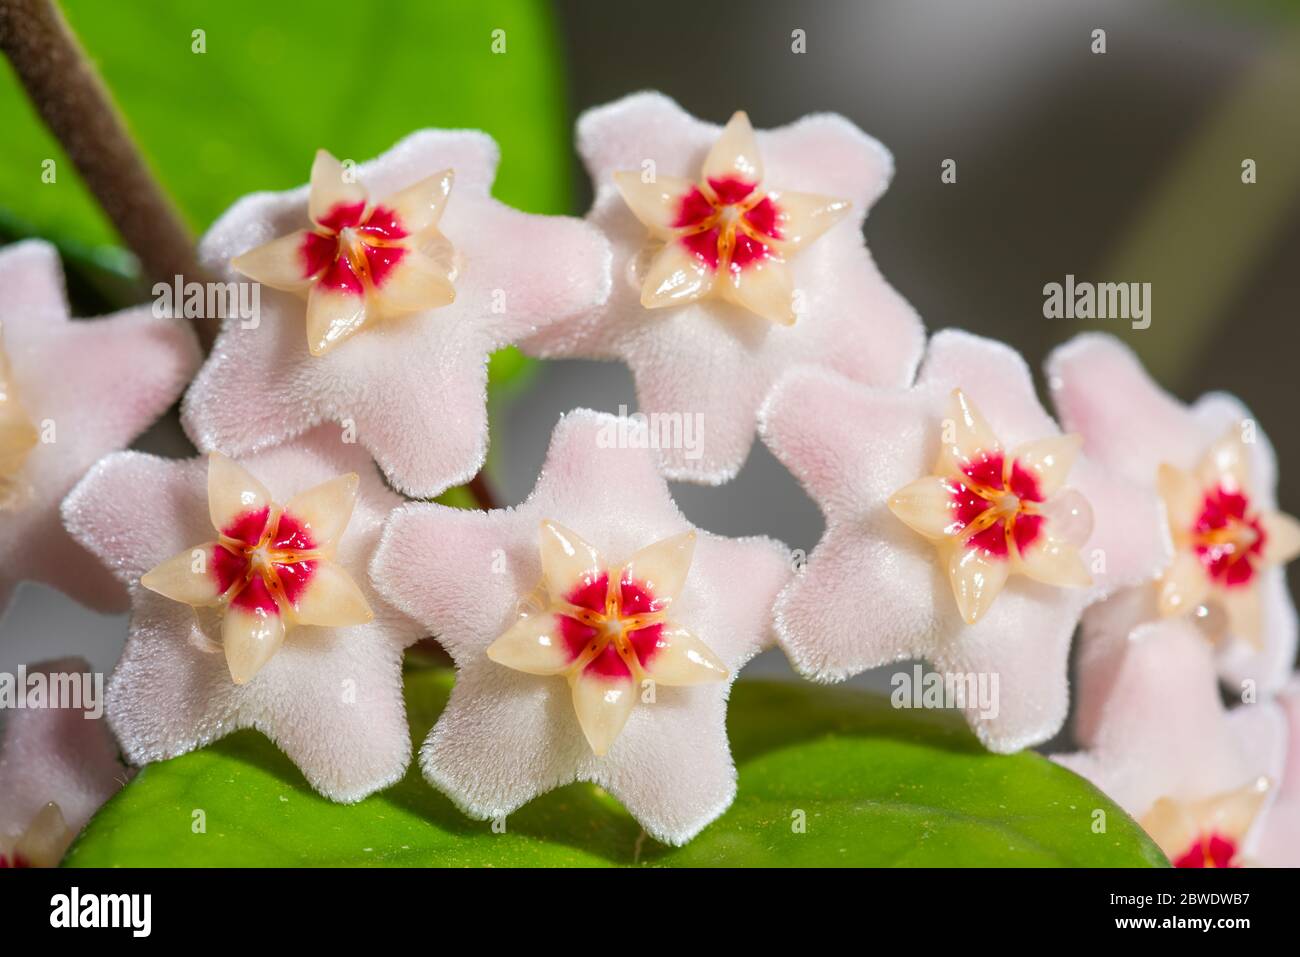 Hoya lacunosa flowering home plant Stock Photo